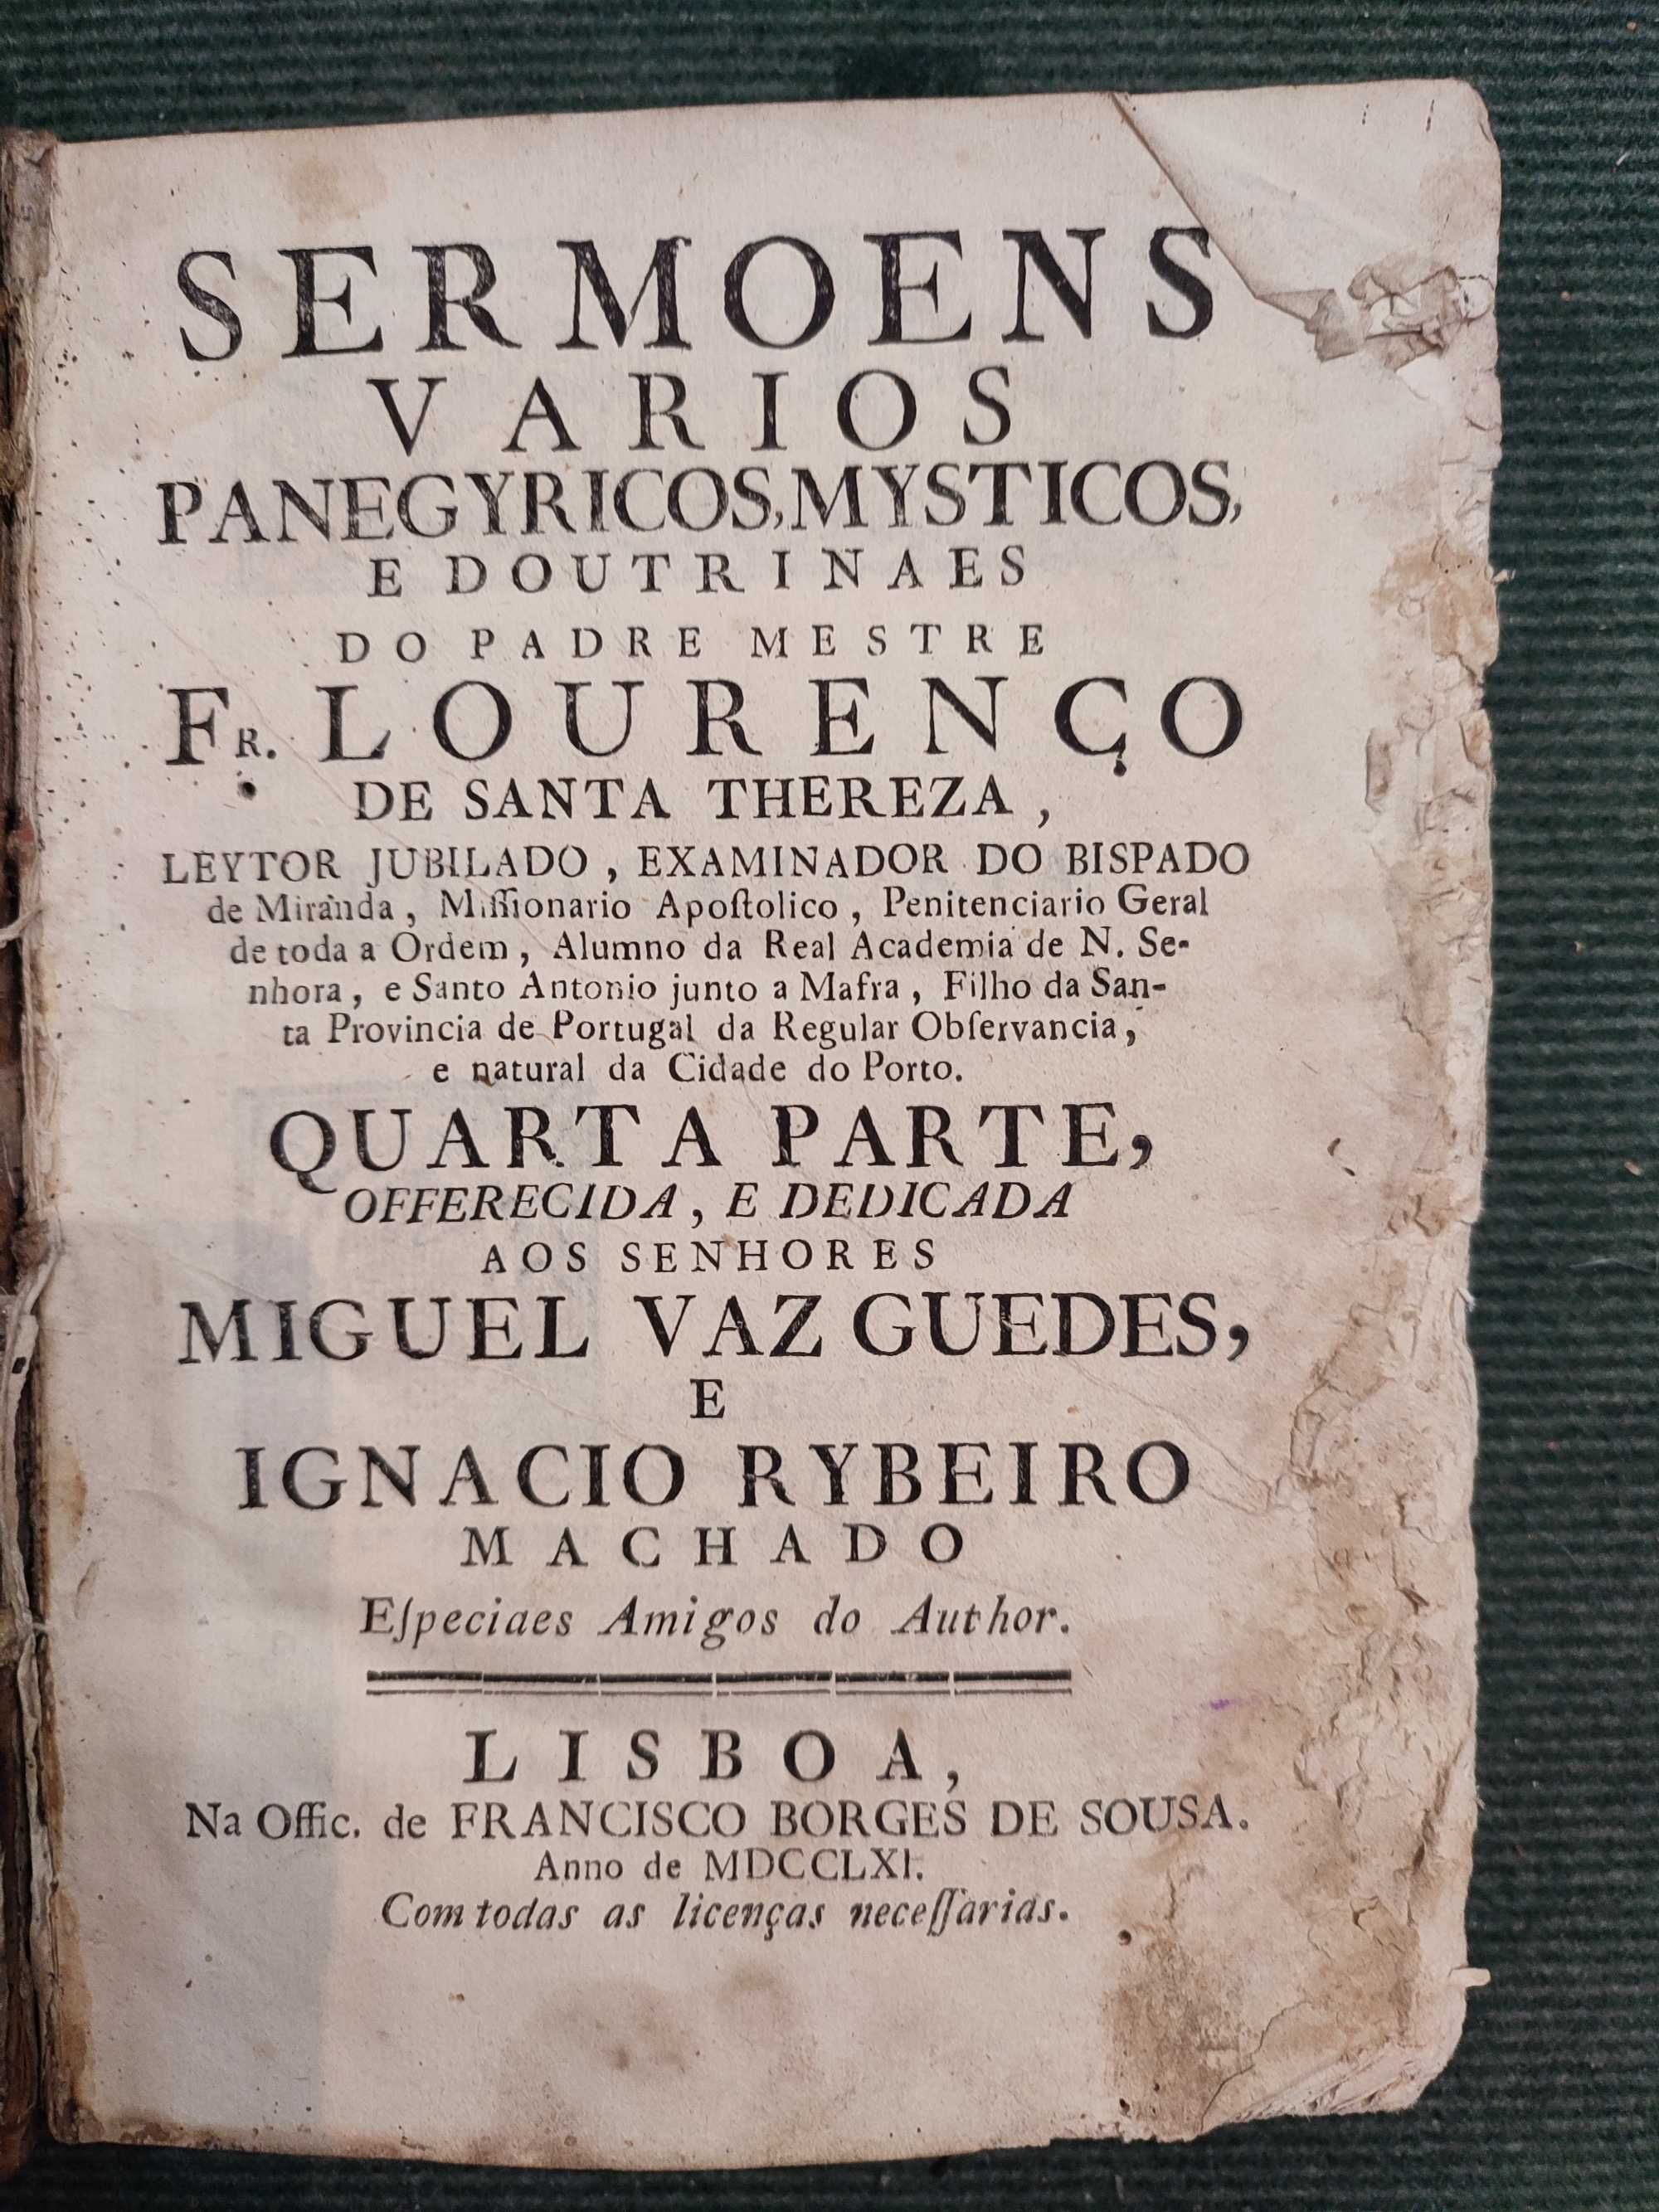 Sermoens Varios Panegyricos, Mysticos e Doutrinaes- 1761